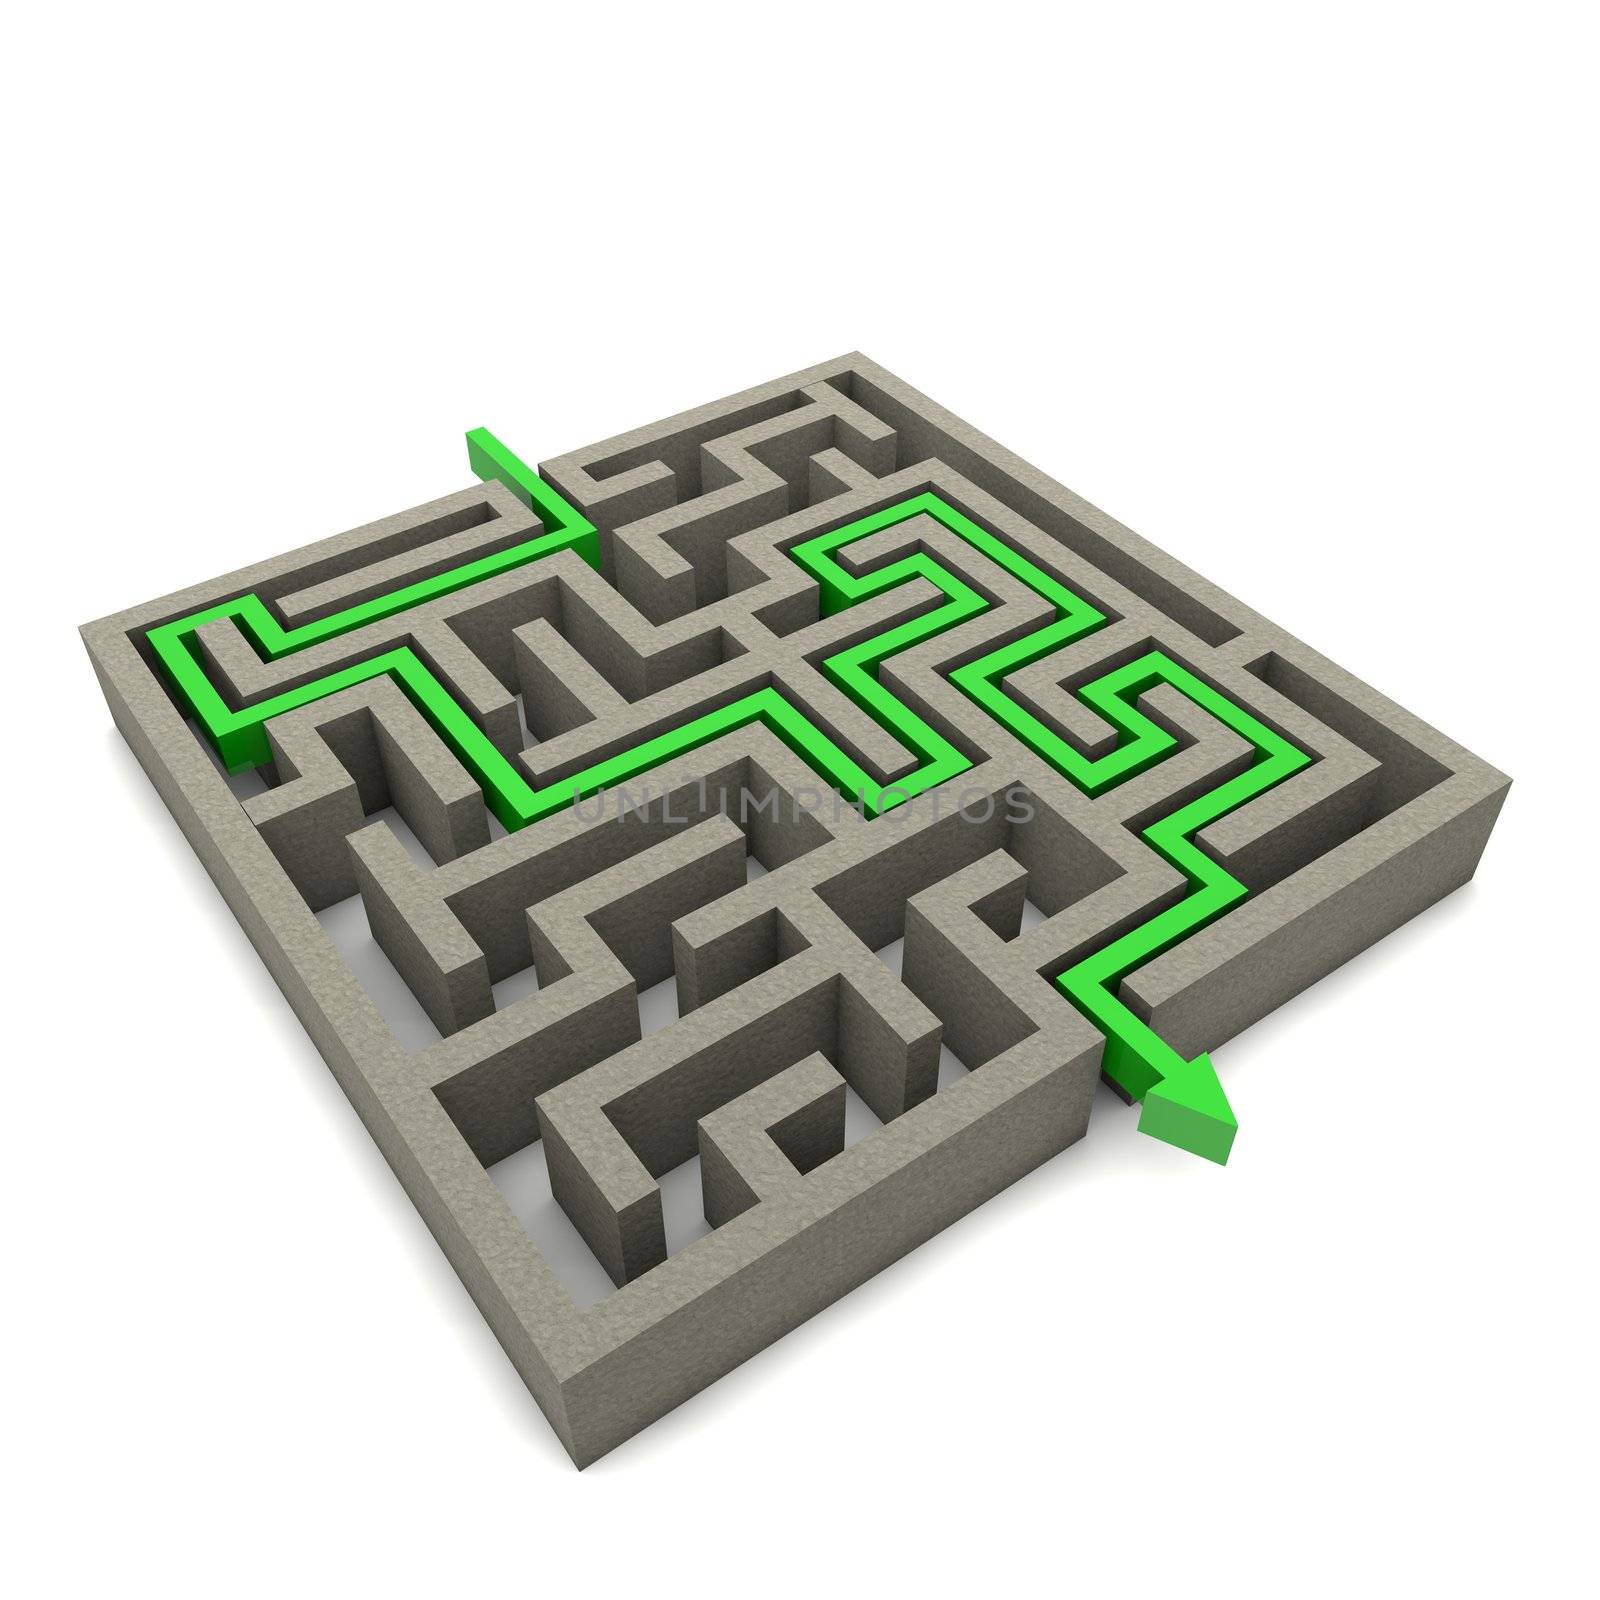 The labyrinth by 3DAgentur